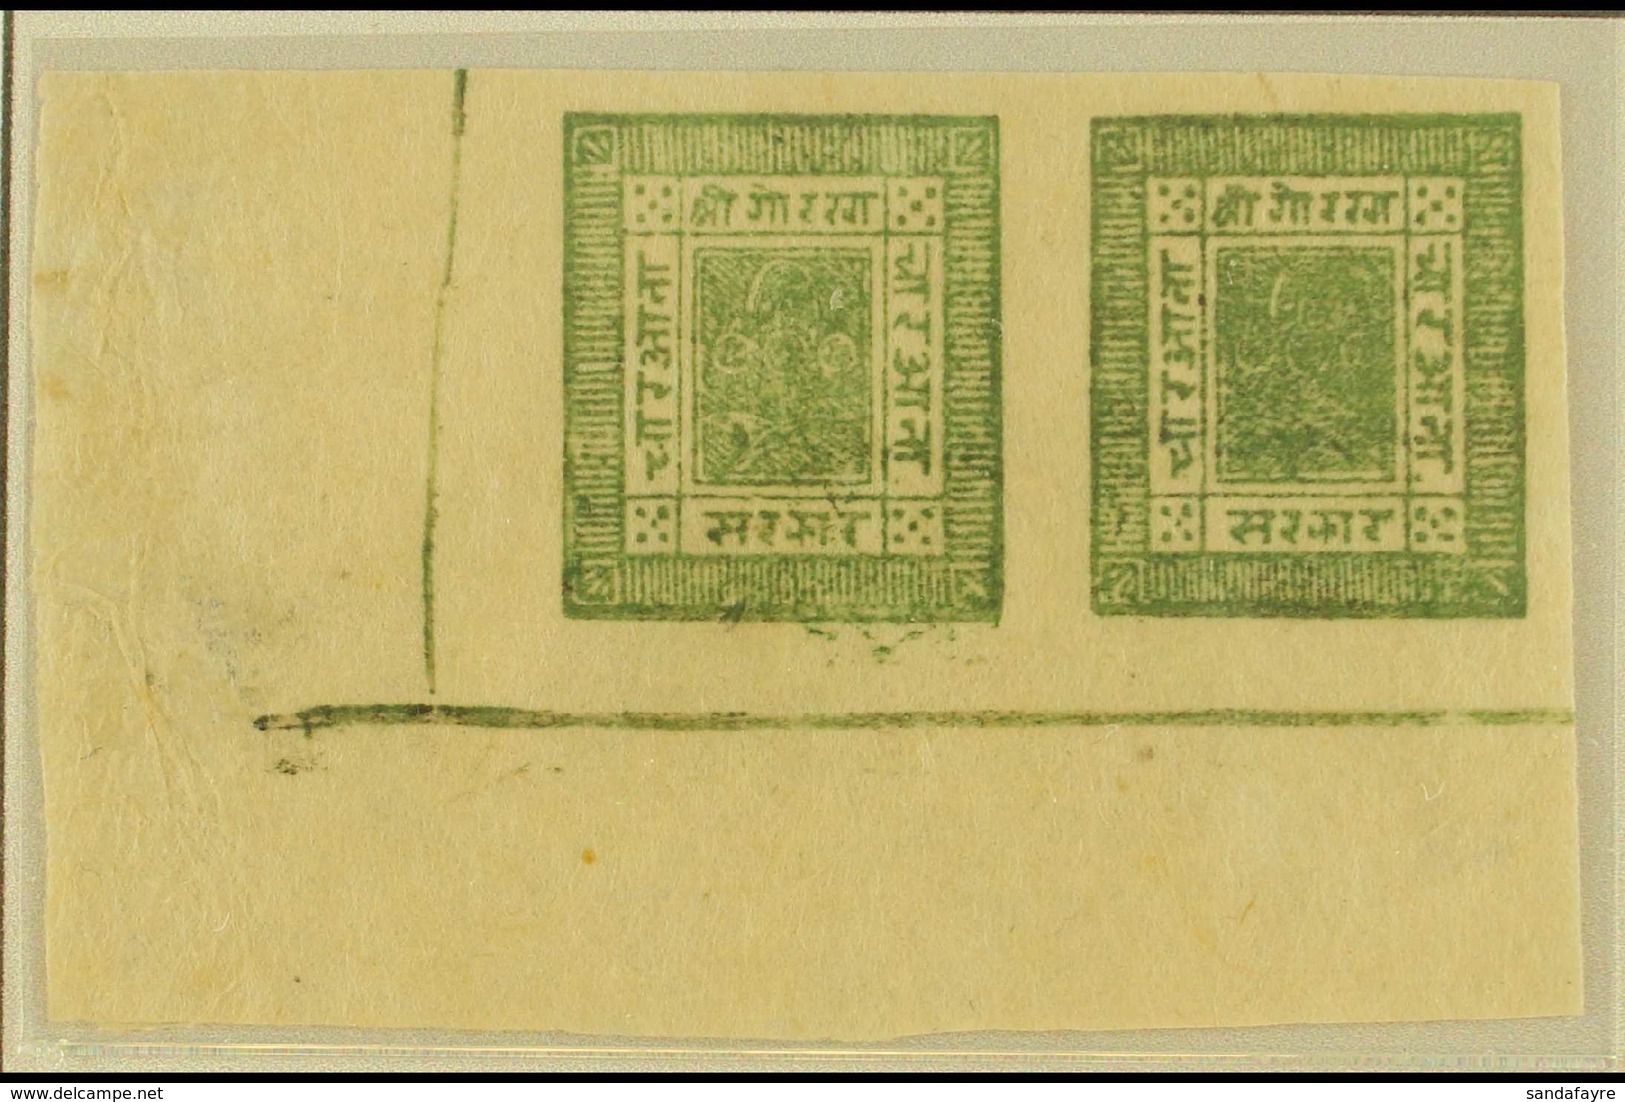 1886-9 4a Green, Slightly Blurred Impressions, Corner Marginal Pair, Setting 3/8, Positions 57/8, SG 12, Scott 9, Unused - Nepal